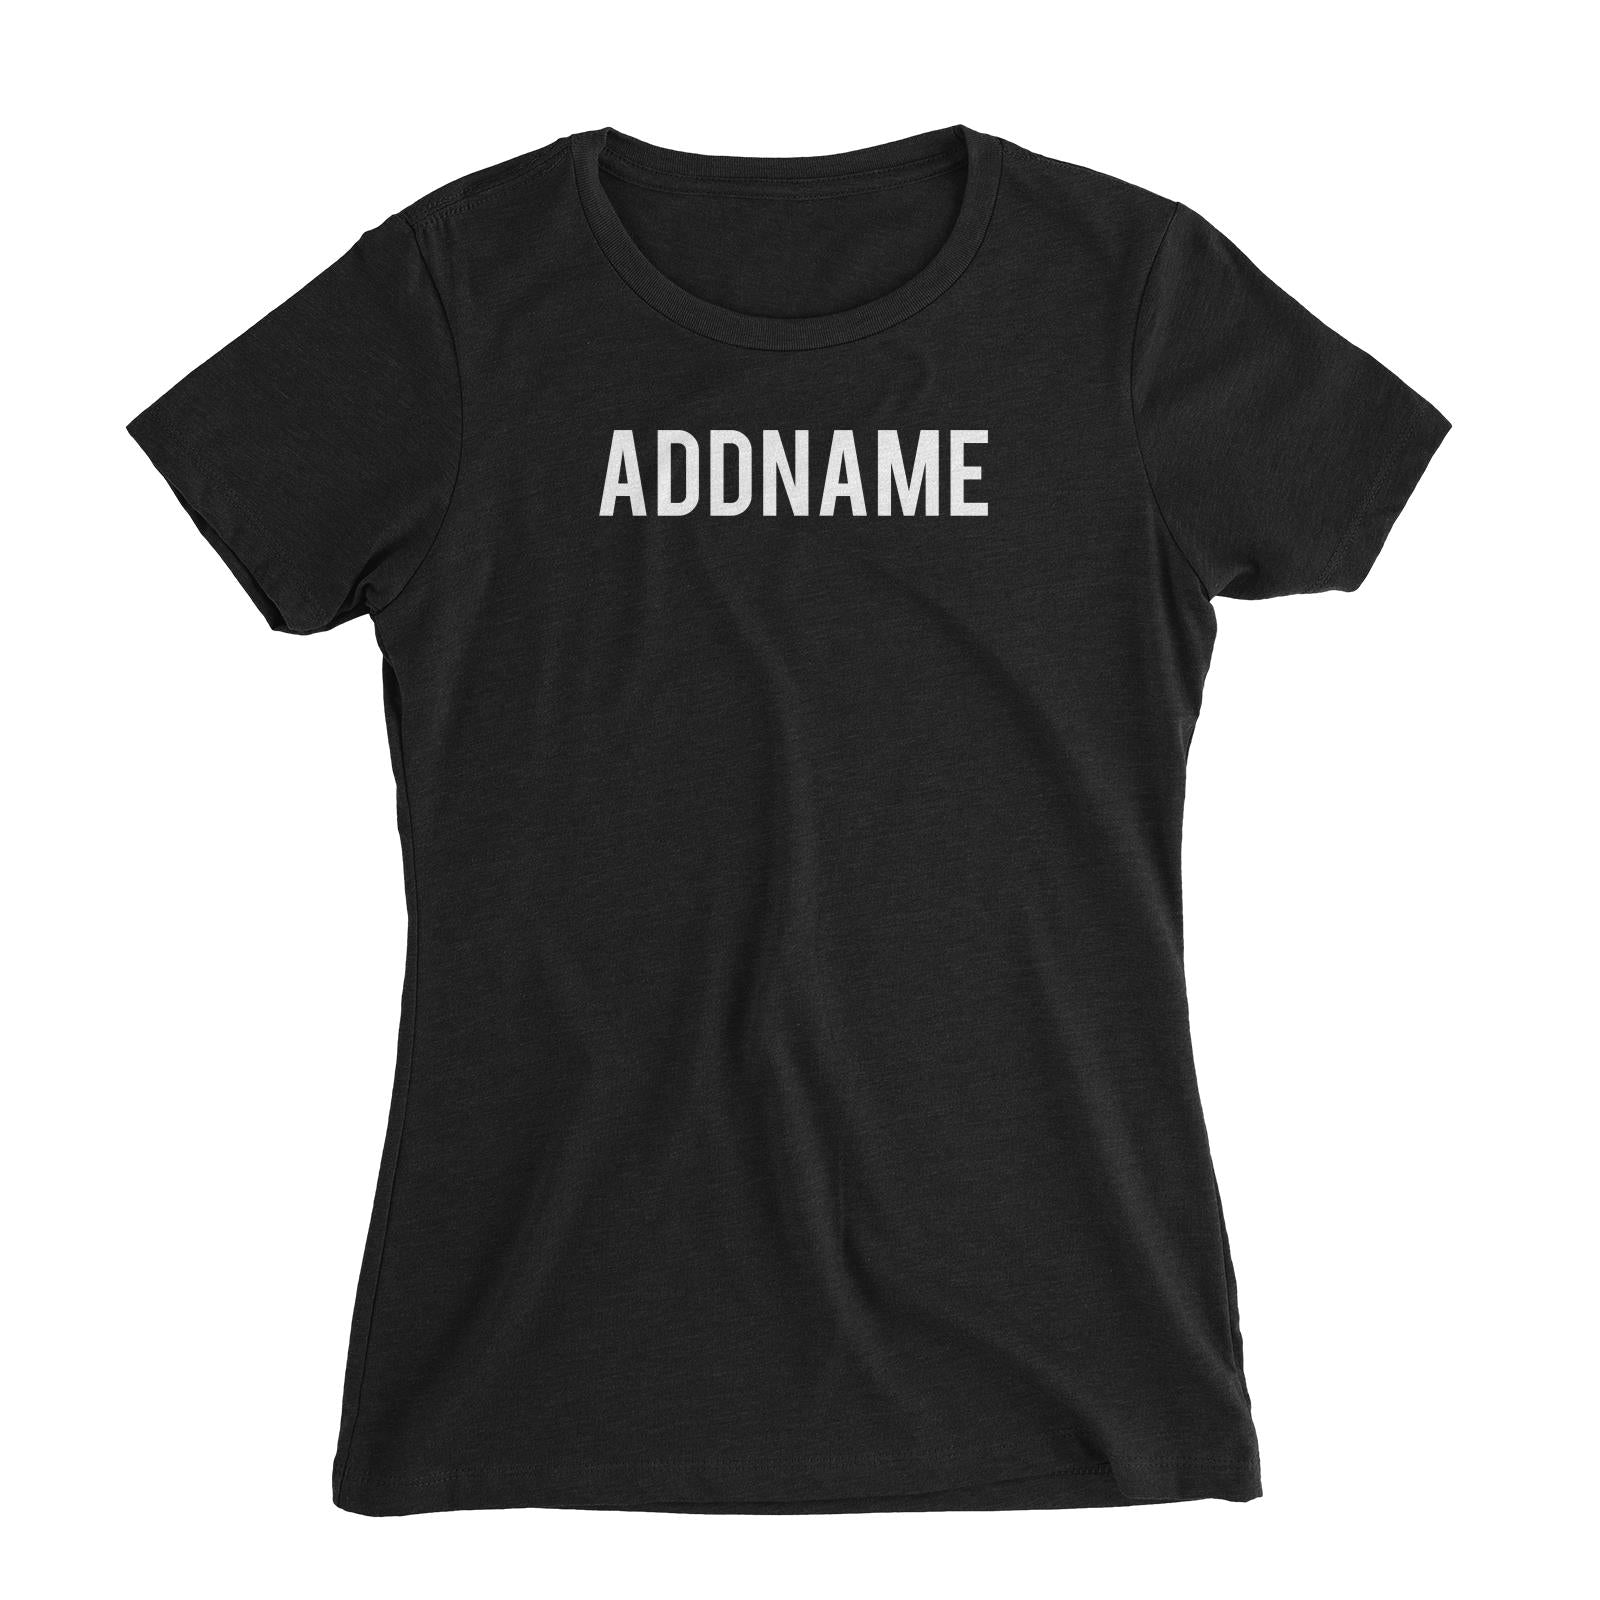 If Lost Return To Addname Original Women's Slim Fit T-Shirt